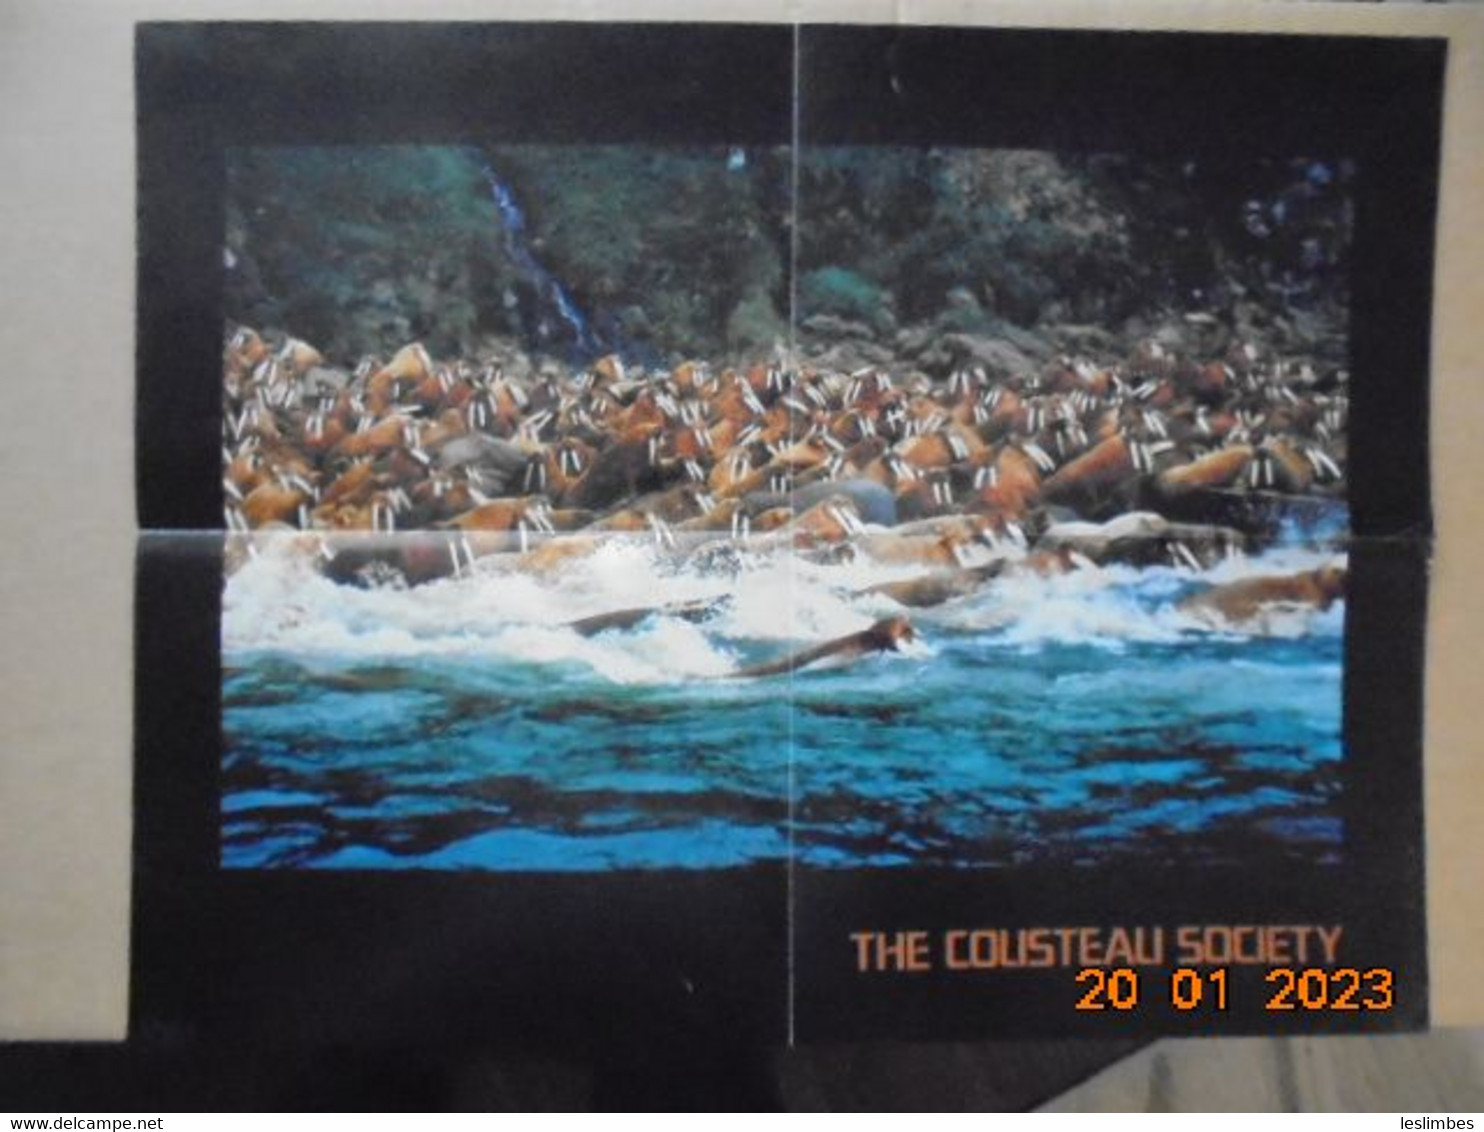 Cousteau Society Bulletin Et Affiche En Anglais : Calypso Log, Volume 3, Number 6 (November - December 1976) - Nature/ Outdoors